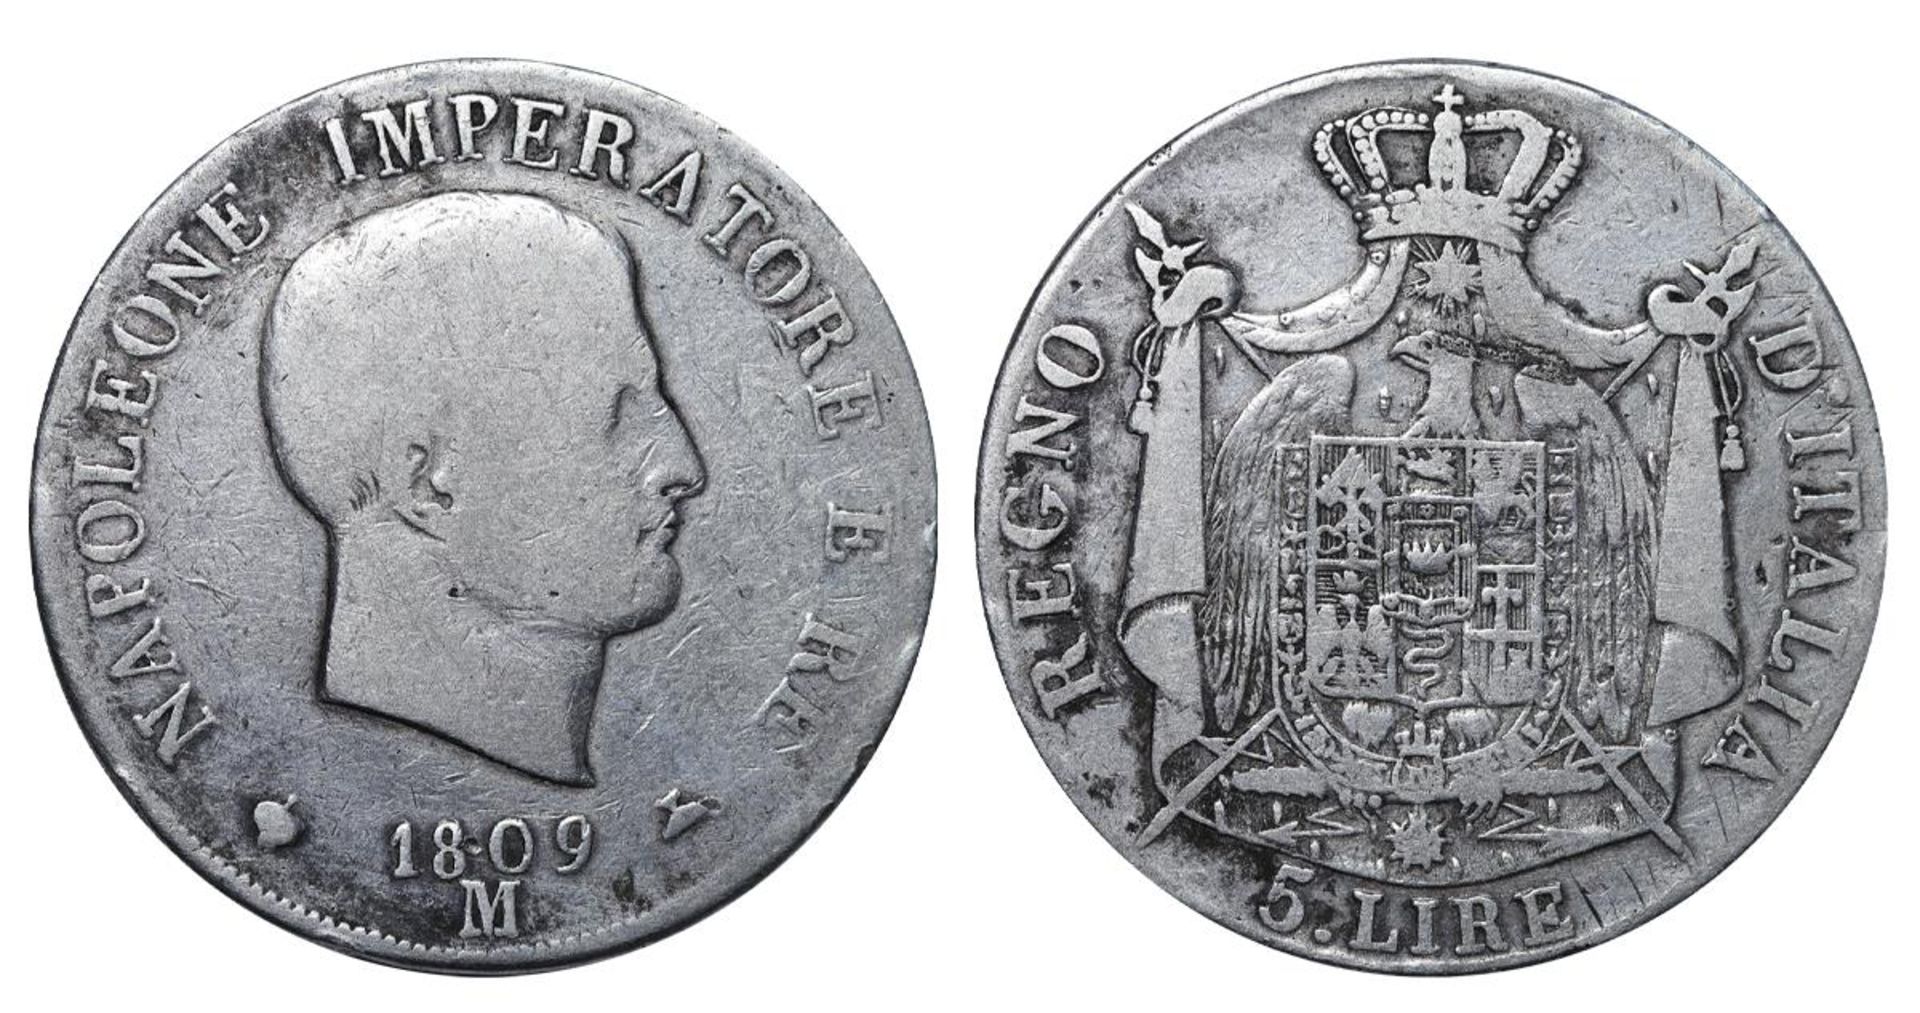 Napoleonic Kingdom of Italy, 5 Lire, 1809 year, M